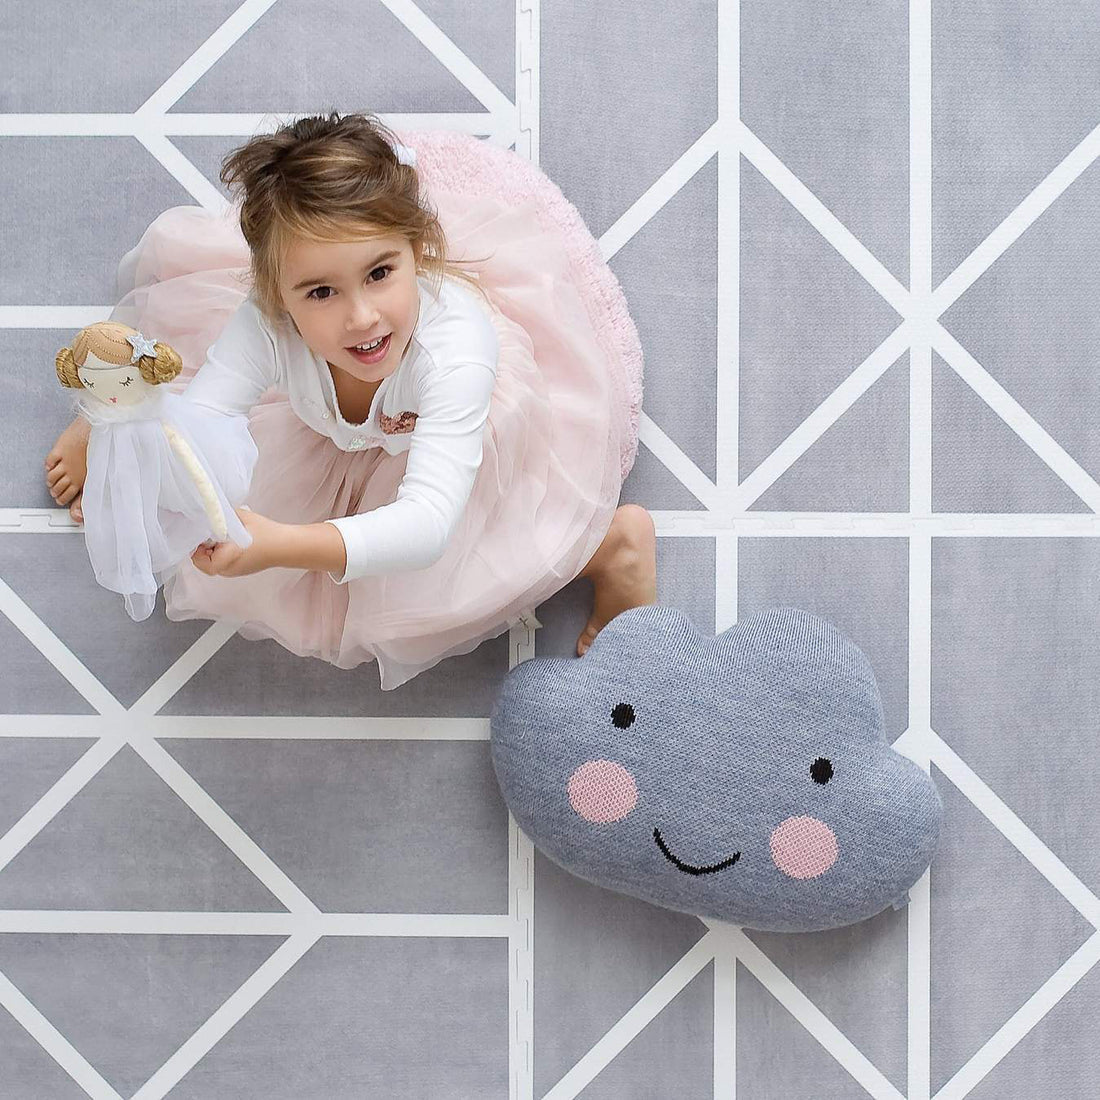 toddlekind-prettier-playmat-nordic-pebble-120x180cm-6-tiles-&-12-edging-borders- (9)